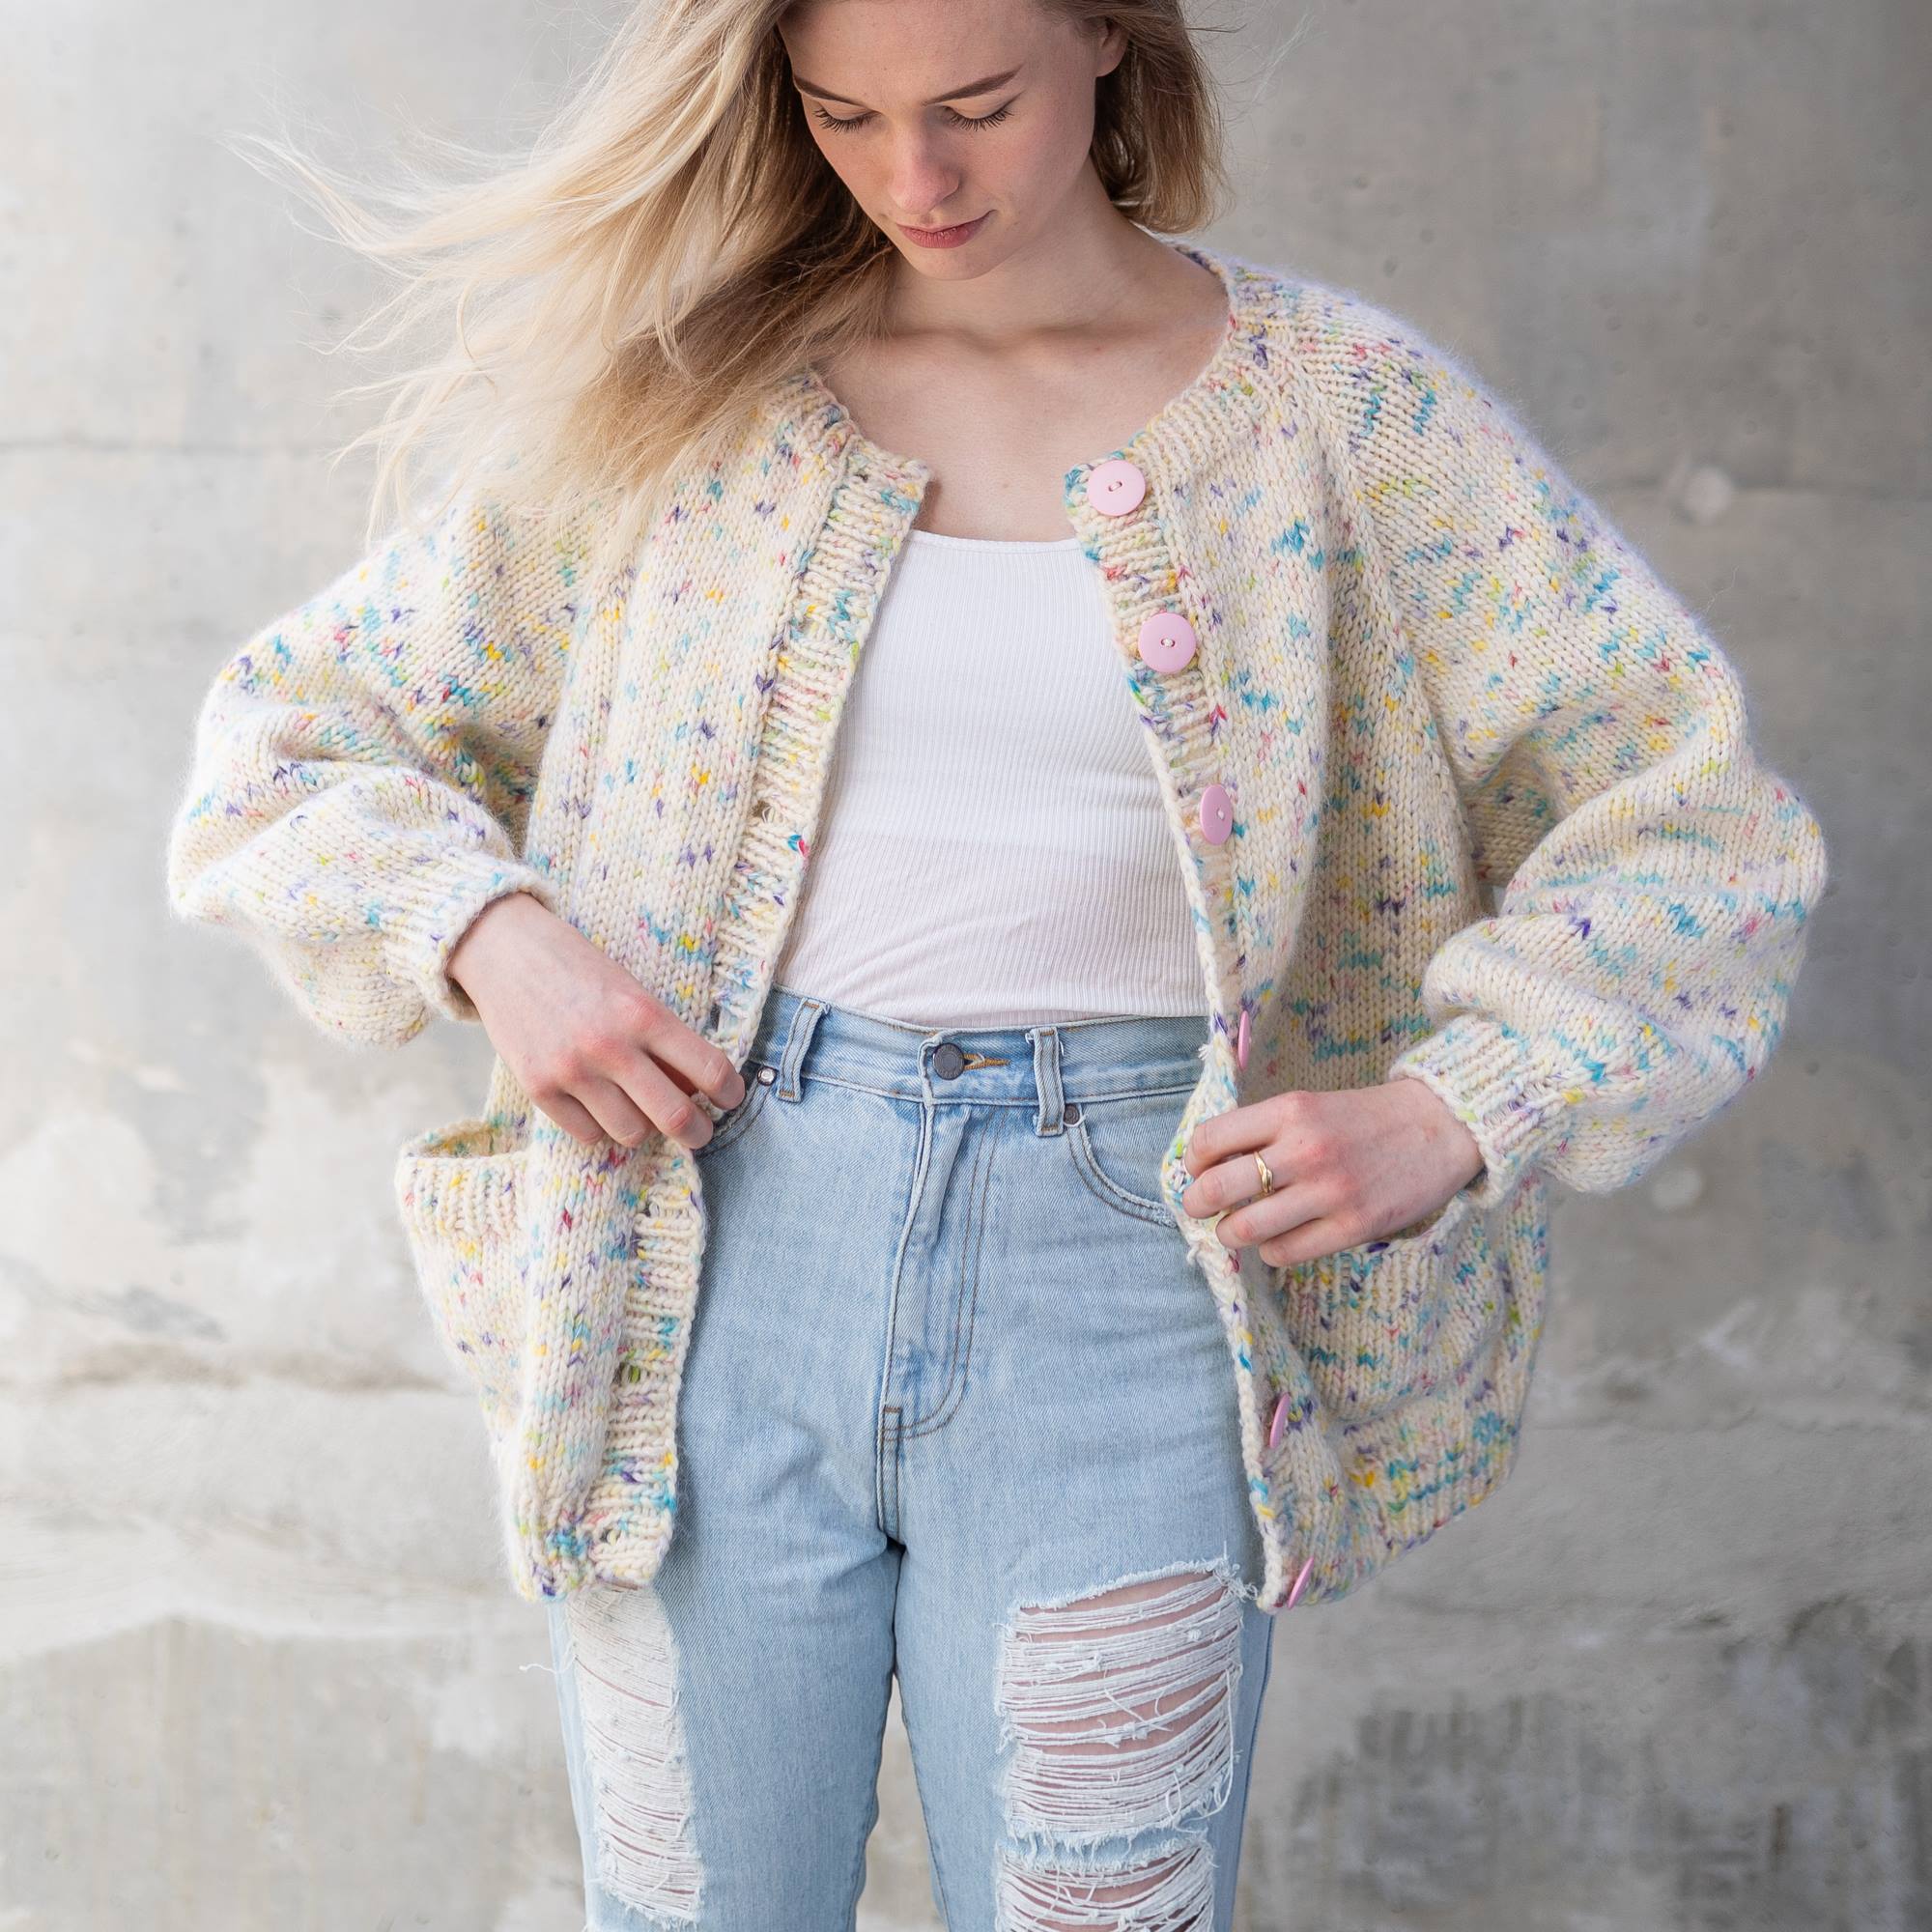  - Tutti frutti cardigan | Womens knitted jacket | Knitting kit - by HipKnitShop - 22/06/2021